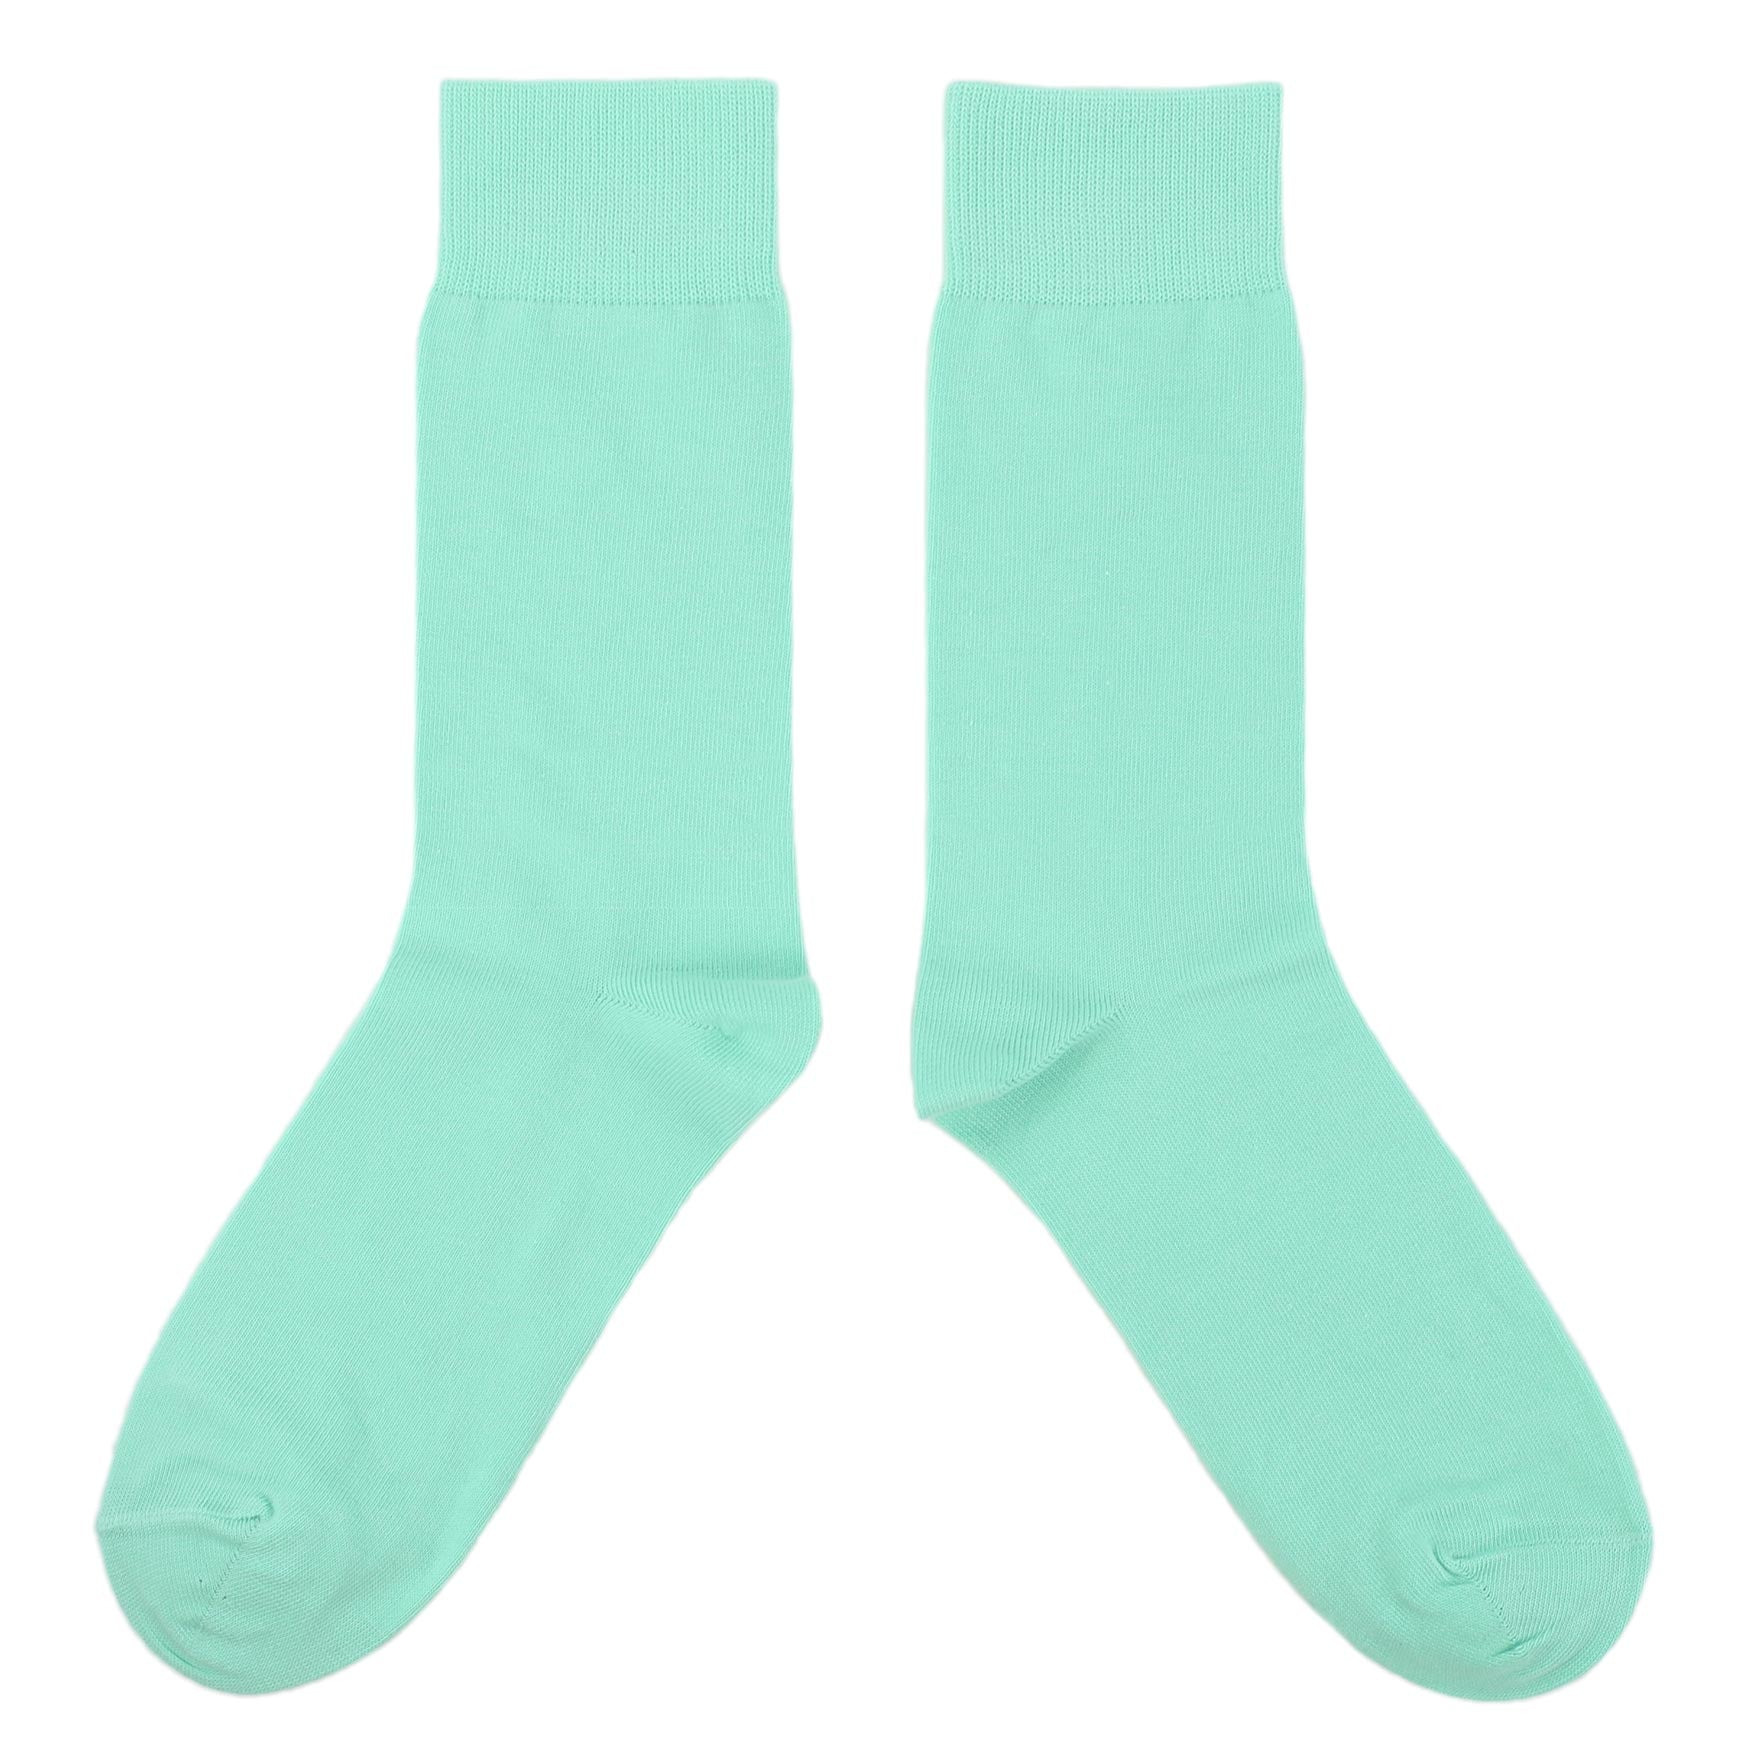 mint-green-solid-color-men's-dress-socks-boldsocks-overhead